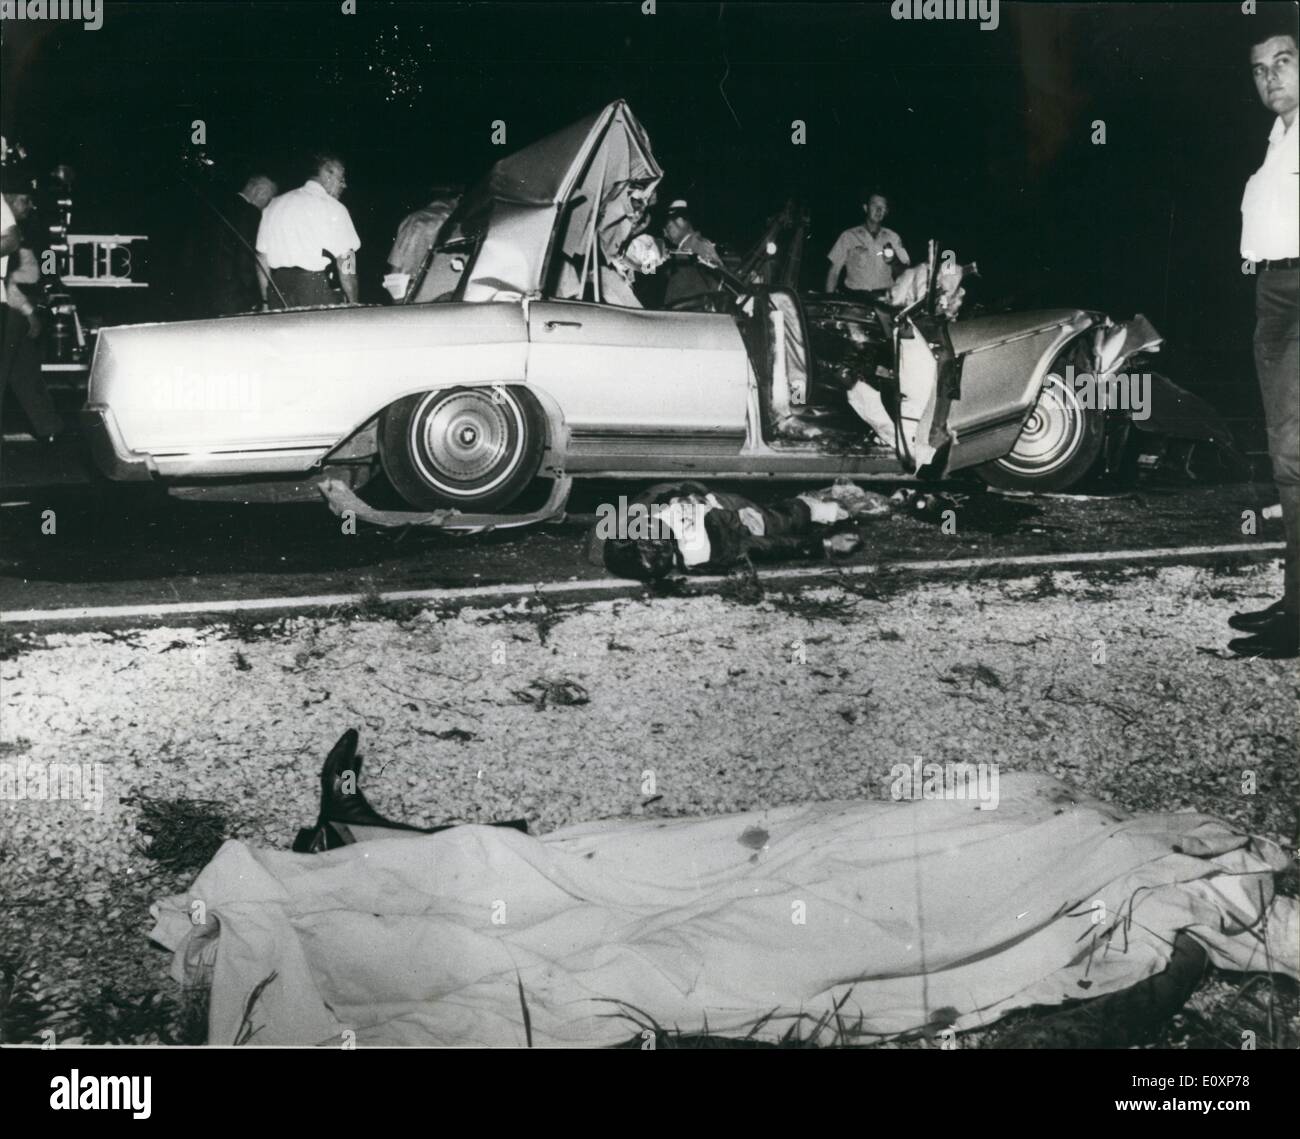 jul-07-1967-jayne-mansfield-killed-in-car-crash-photo-shows-the